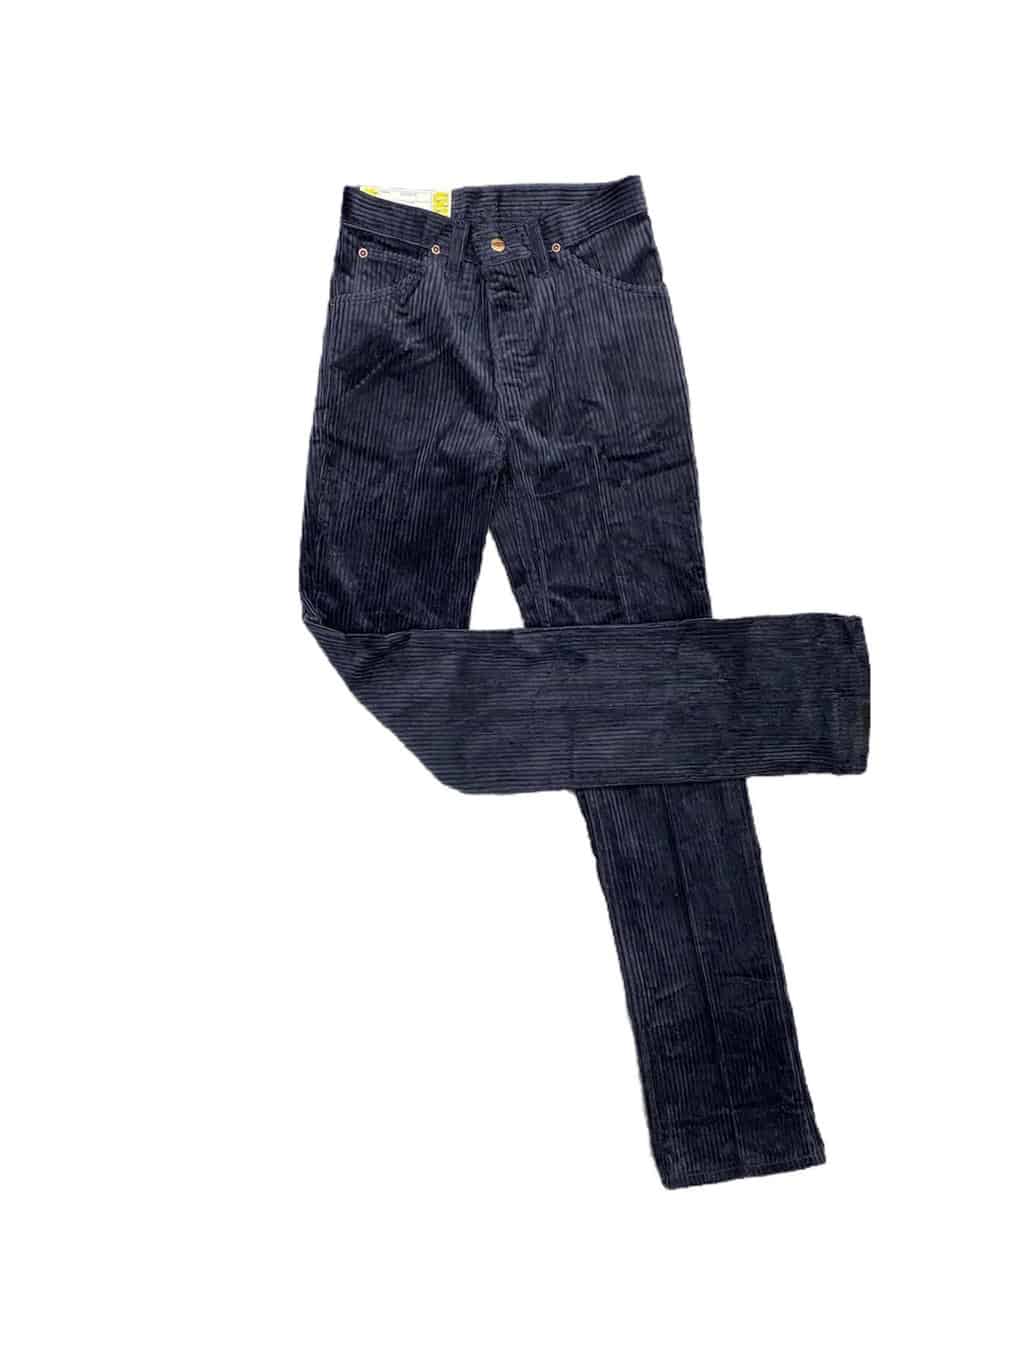 Vintage Wrangler navy blue corduroy high rise jeans circa 70s / 80s,  deadstock - W27 x  - St Cyr Vintage